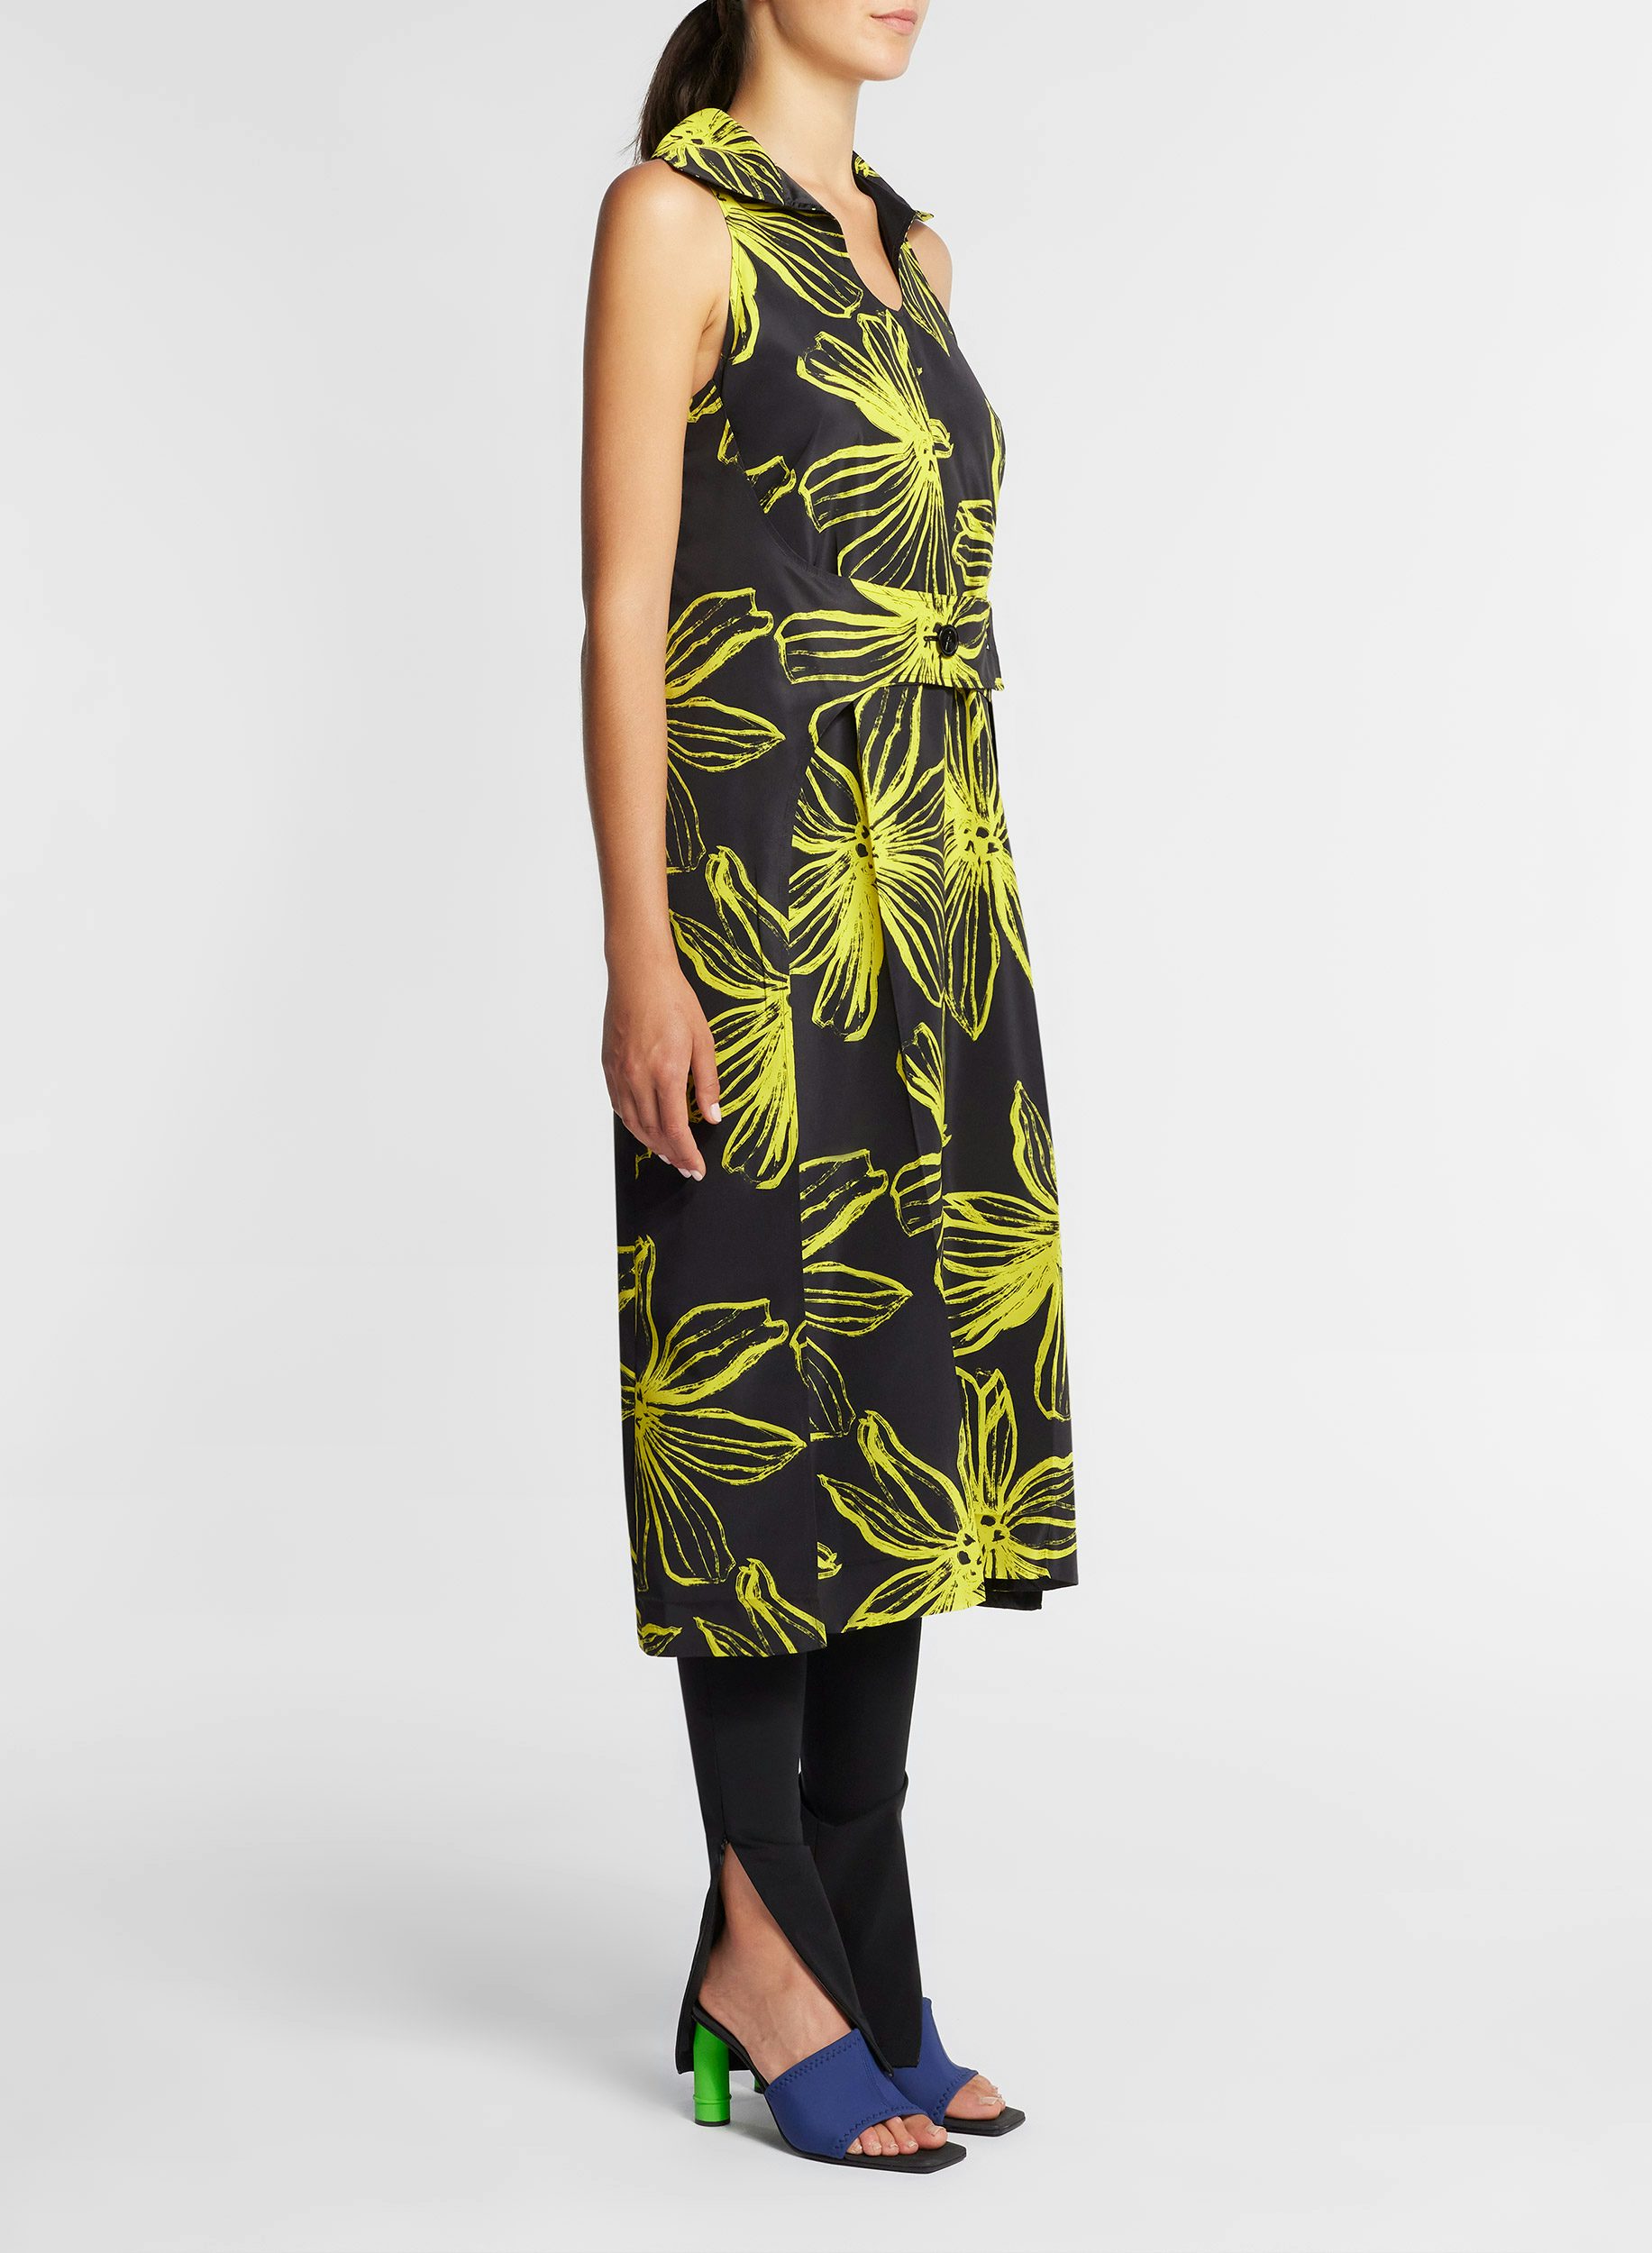 Sleeveless dress Yellow flower print - Nina Ricci